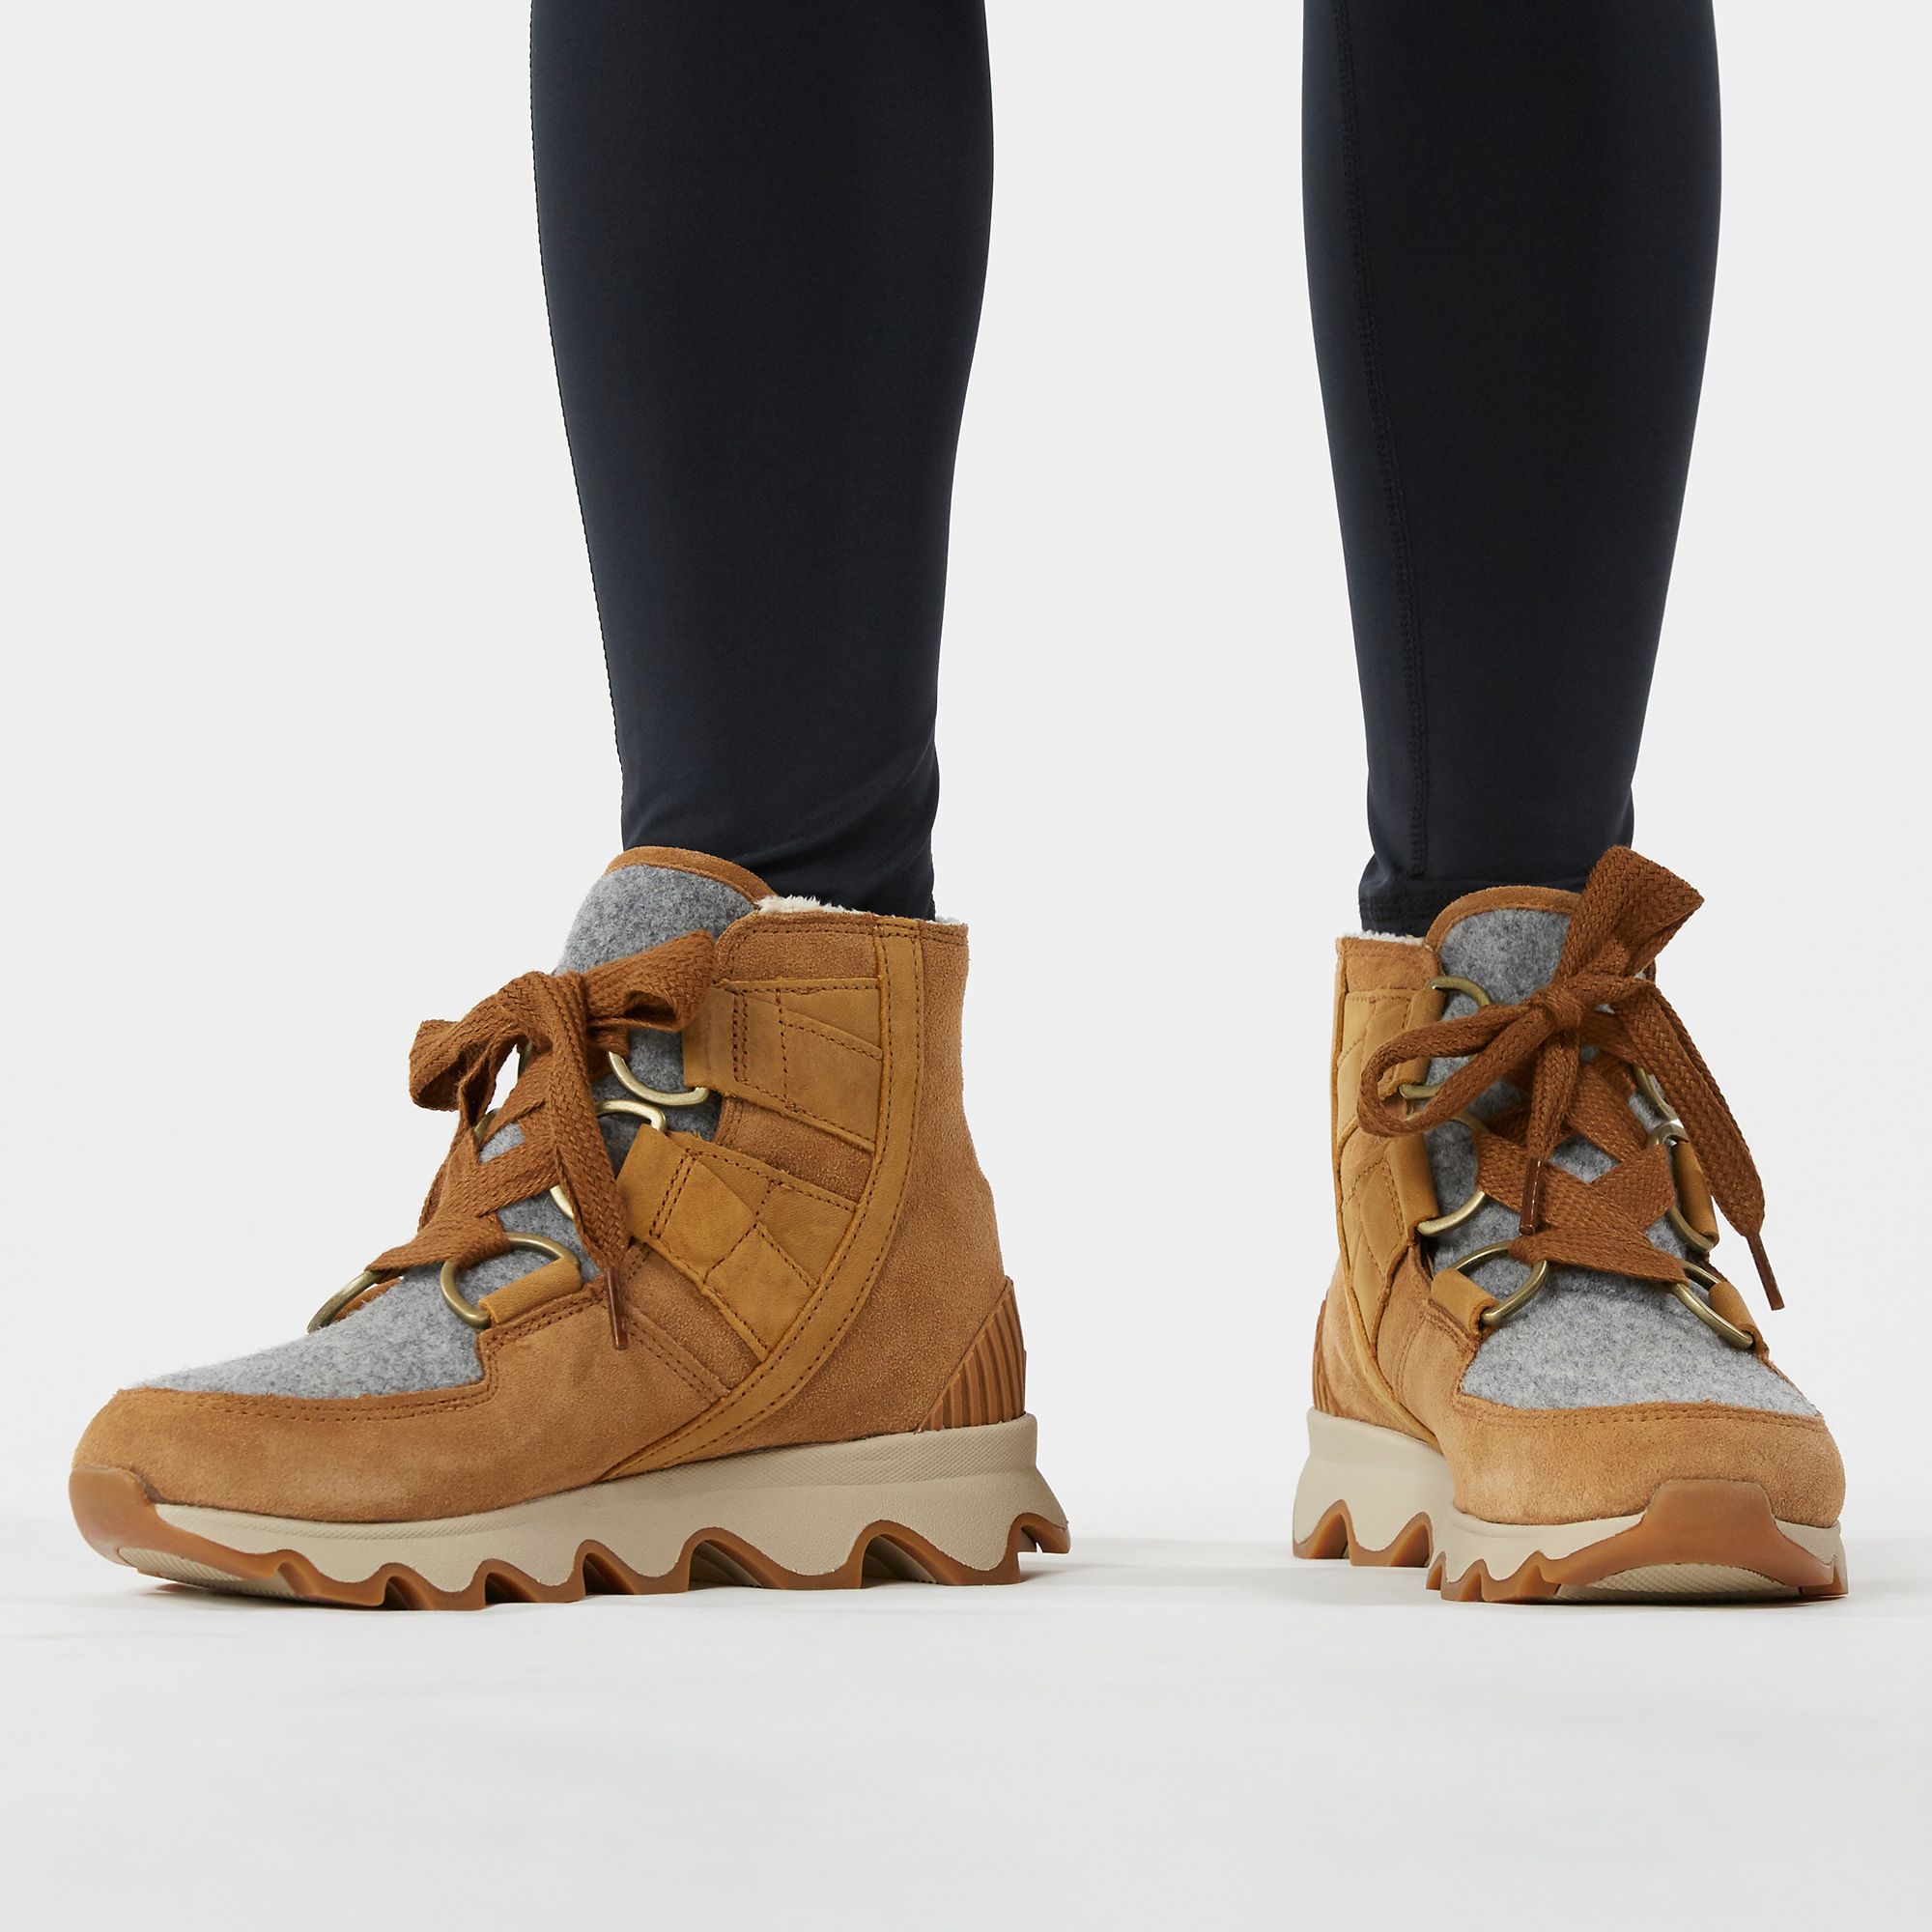 sorel women's hiking boots